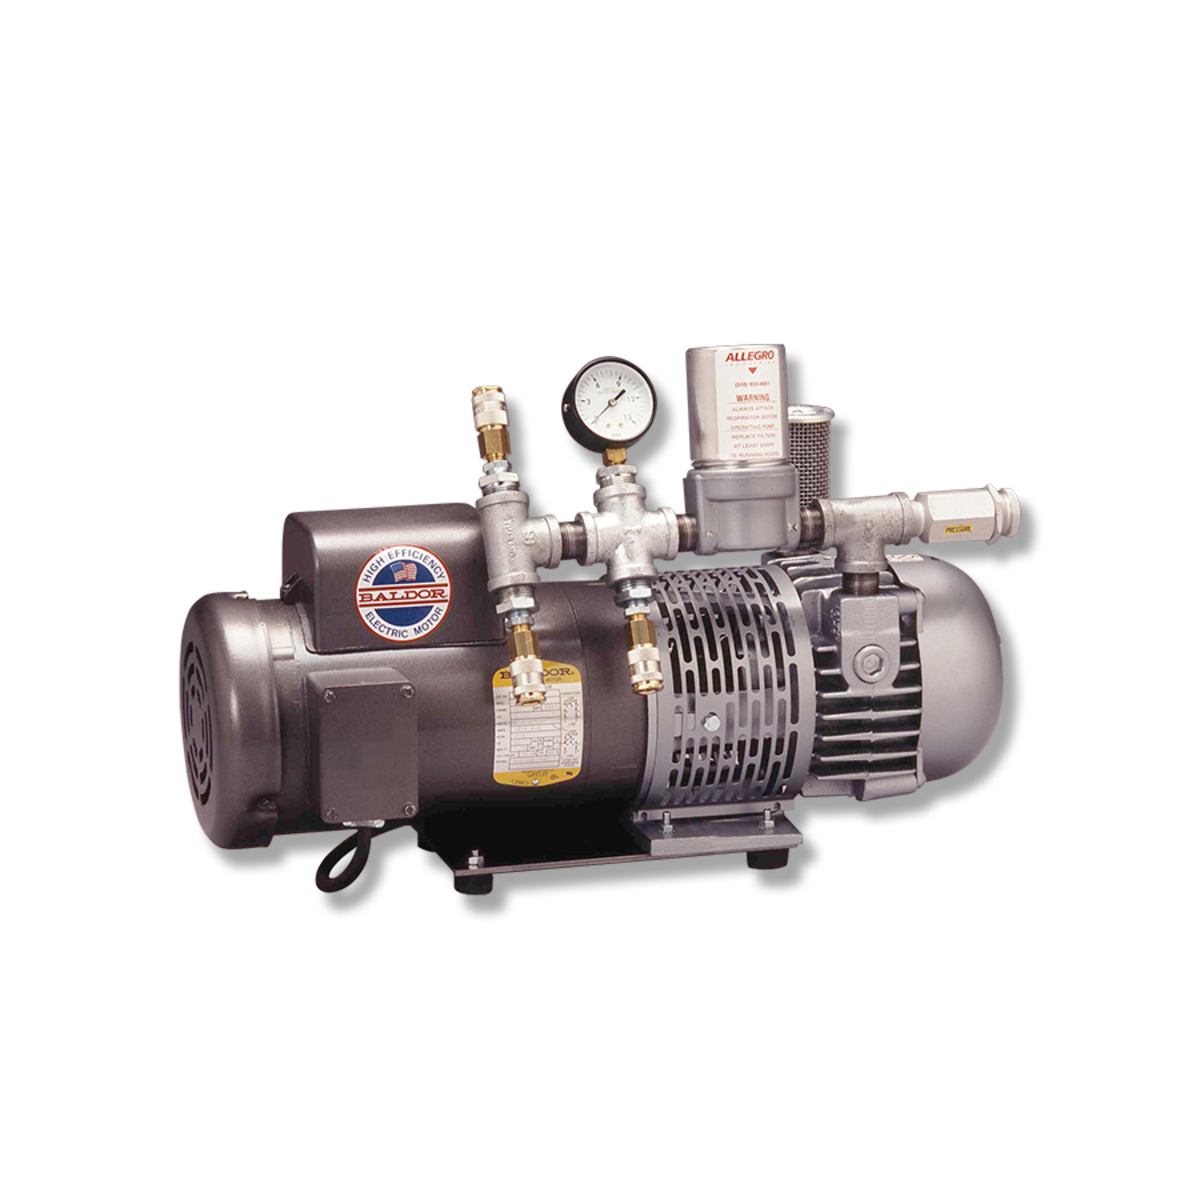 Allegro® Industries A-1500 EX Ambient Air Pump